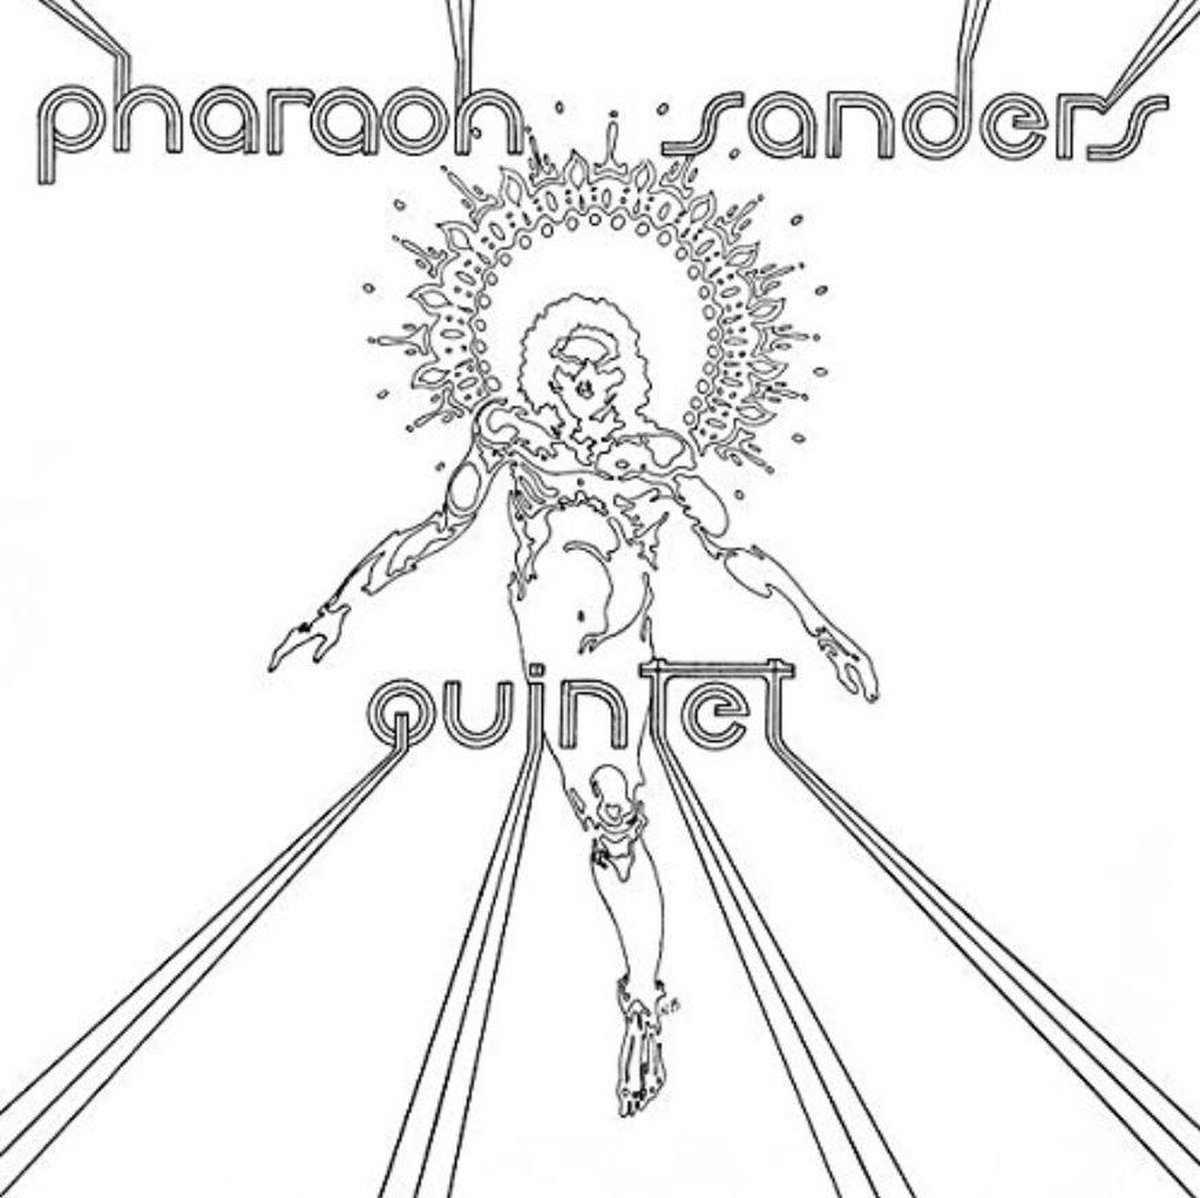 Pharaoh Sanders Quintet - Pharaoh Sanders